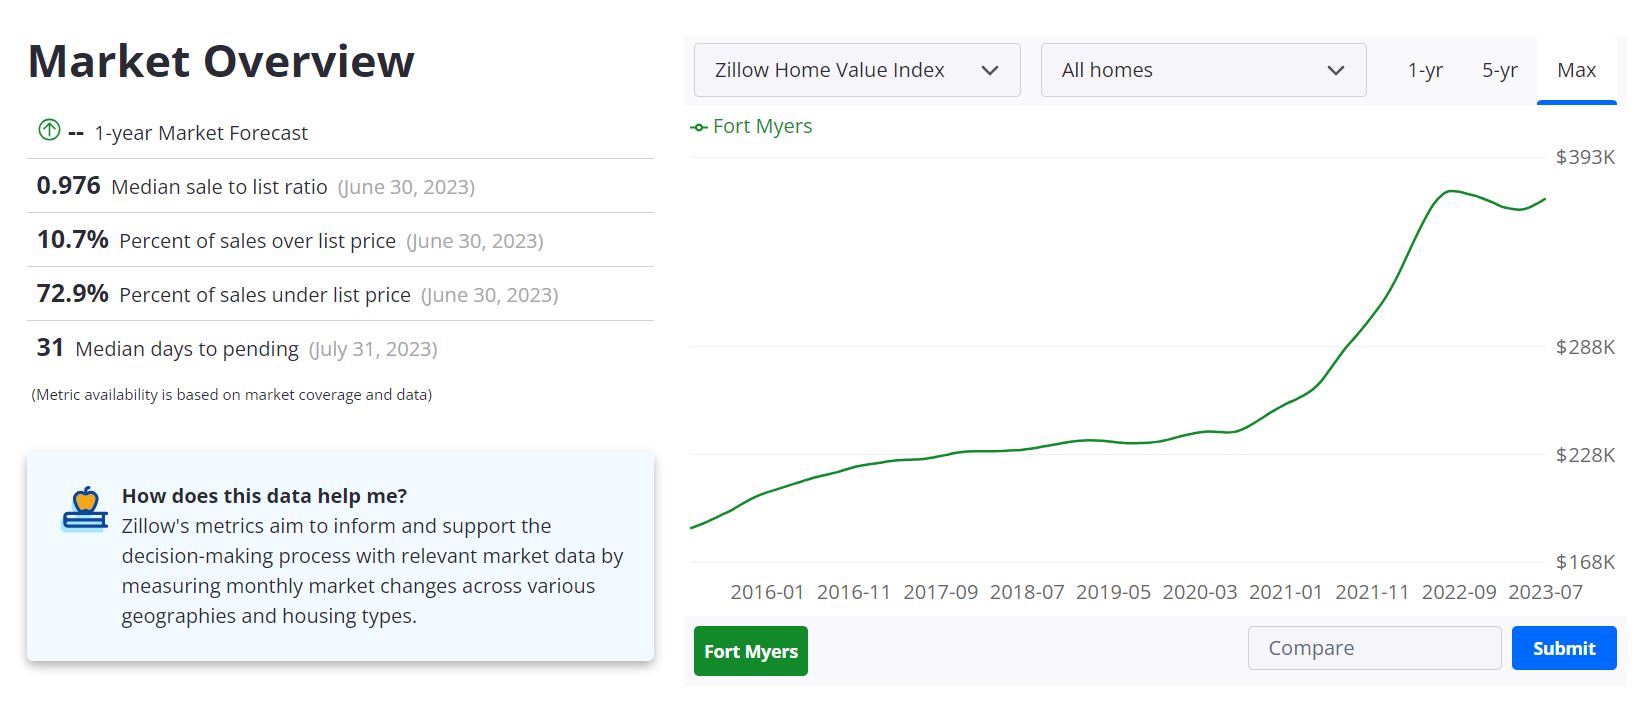 Fort Myers Housing Market Forecast 2023-2024